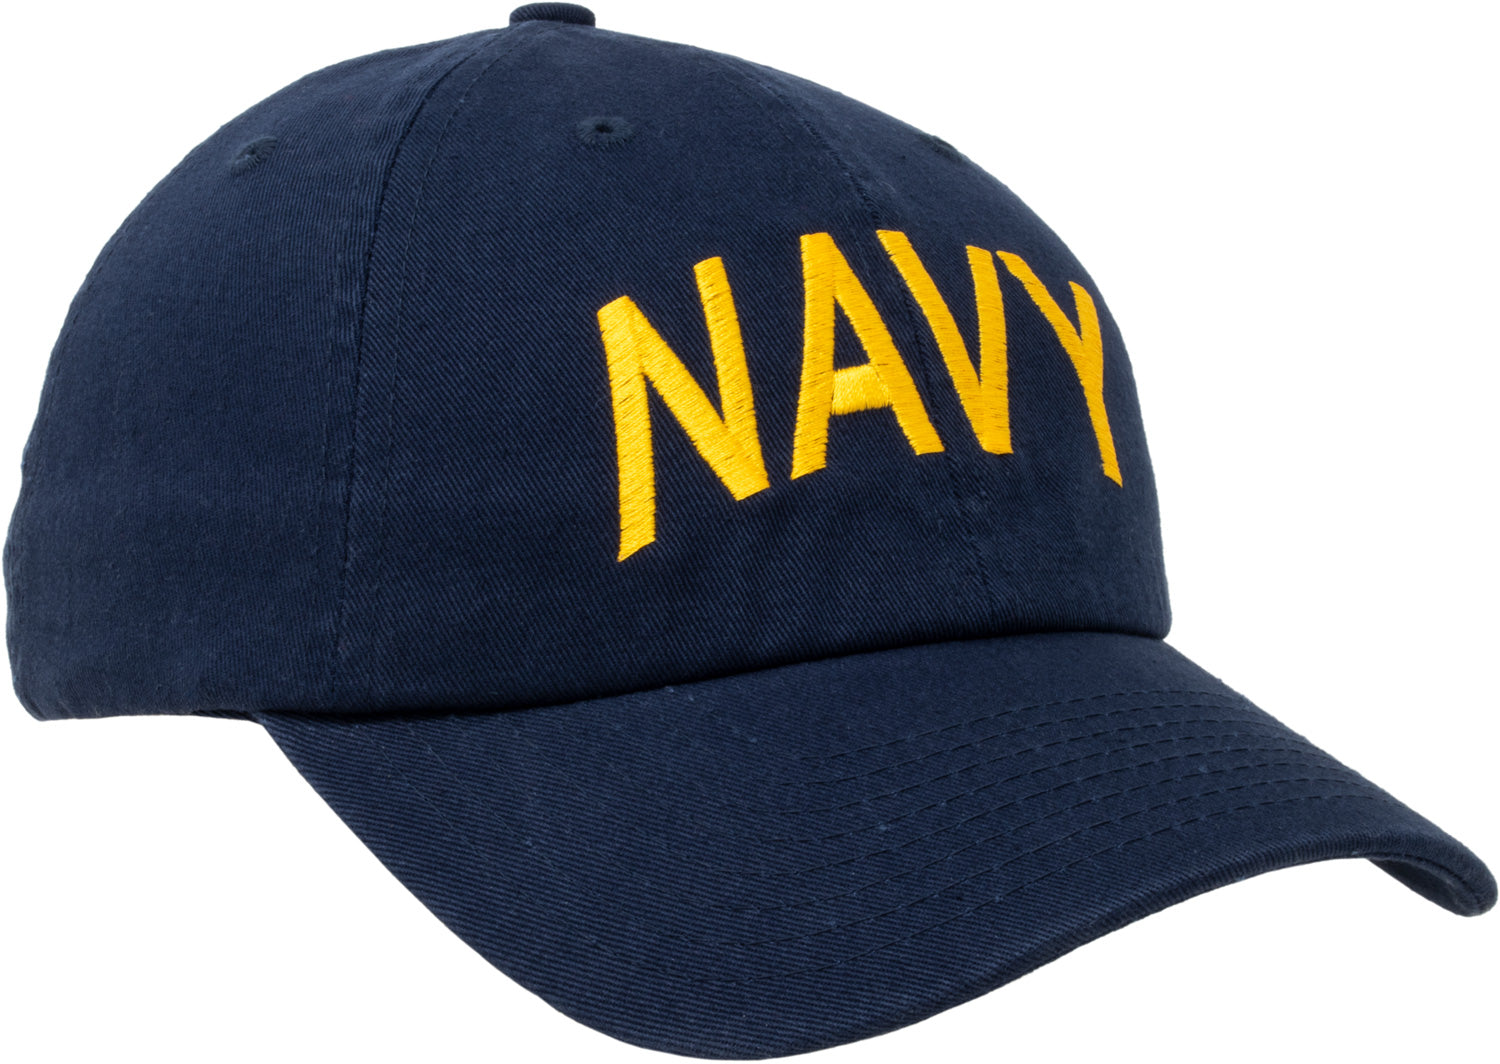 NAVY Hat | United States Military Naval Pride Sailor Baseball Cap for ...